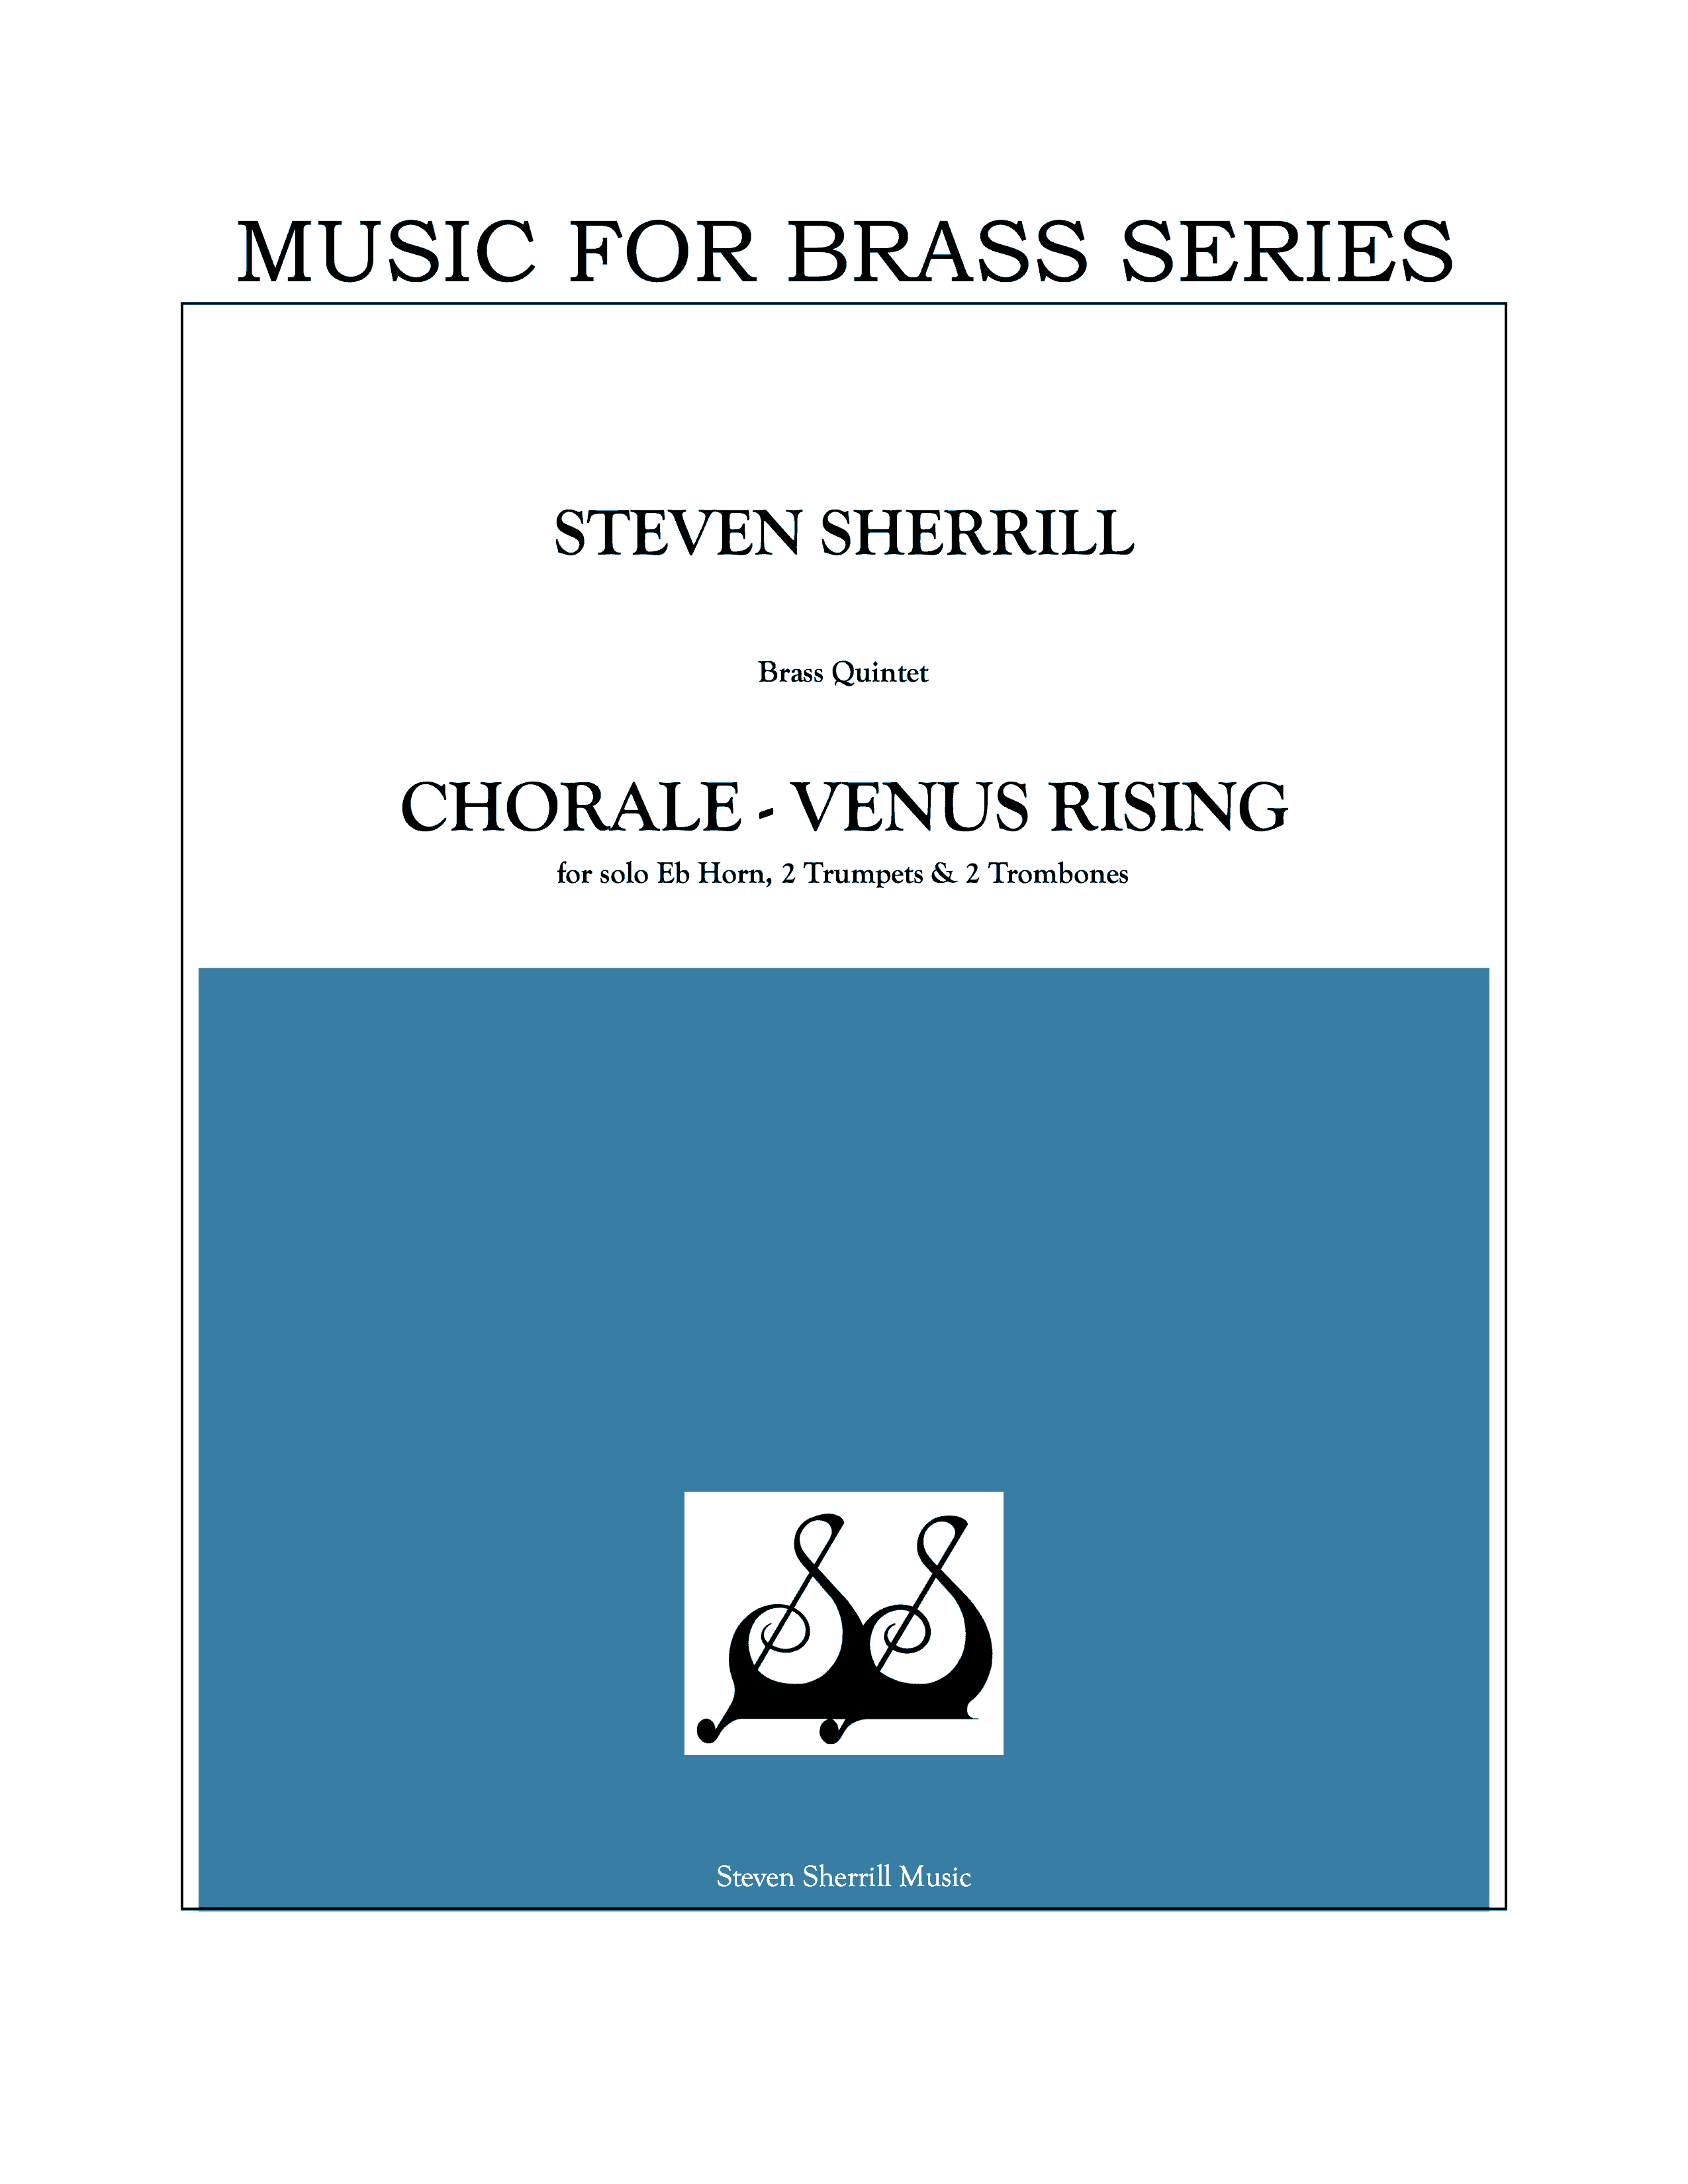 Venus Rising cover page